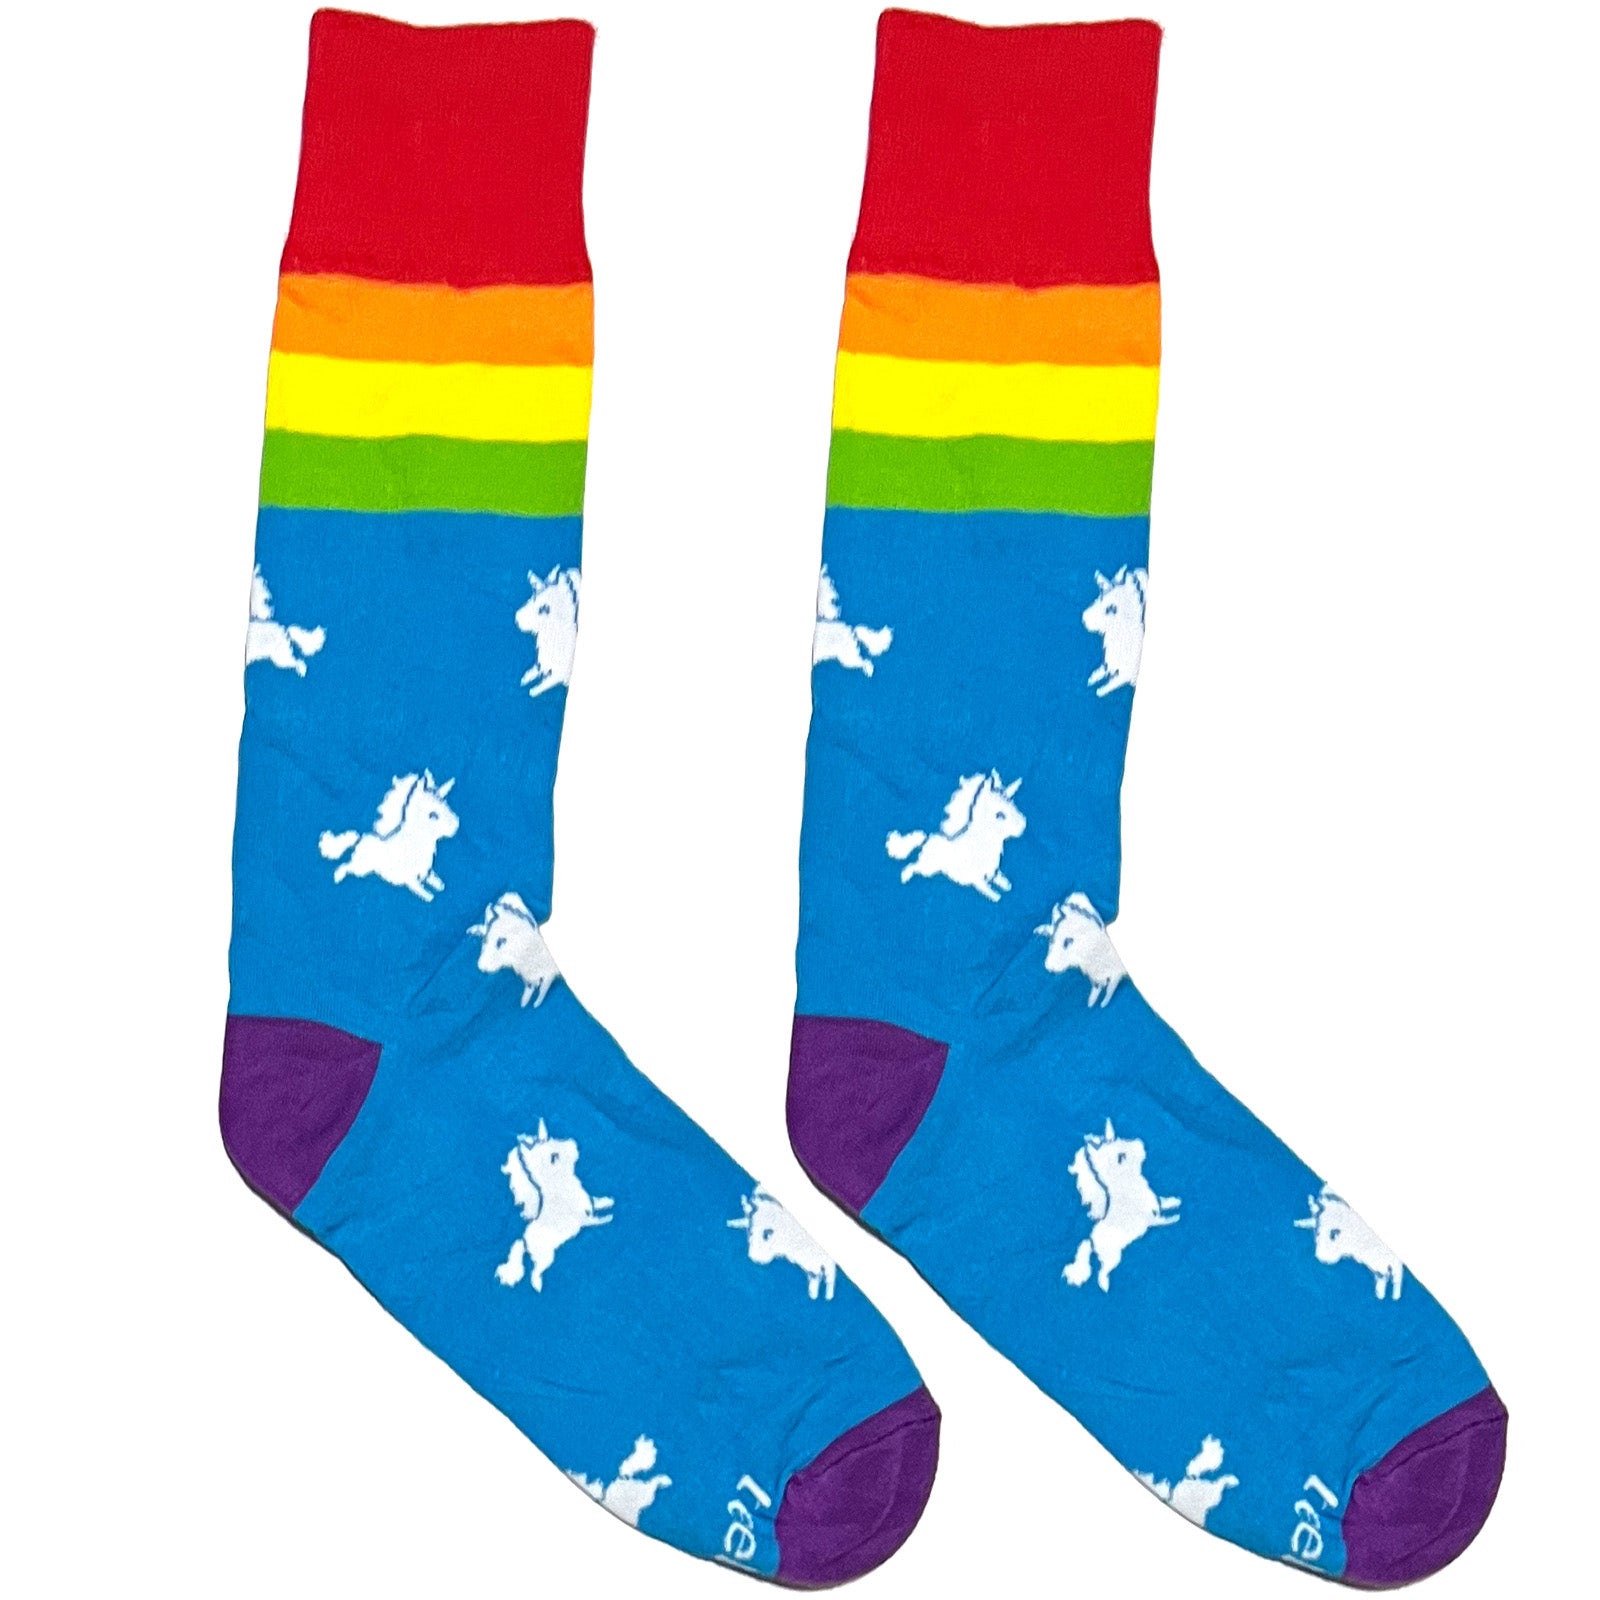 Blue Unicorn Socks